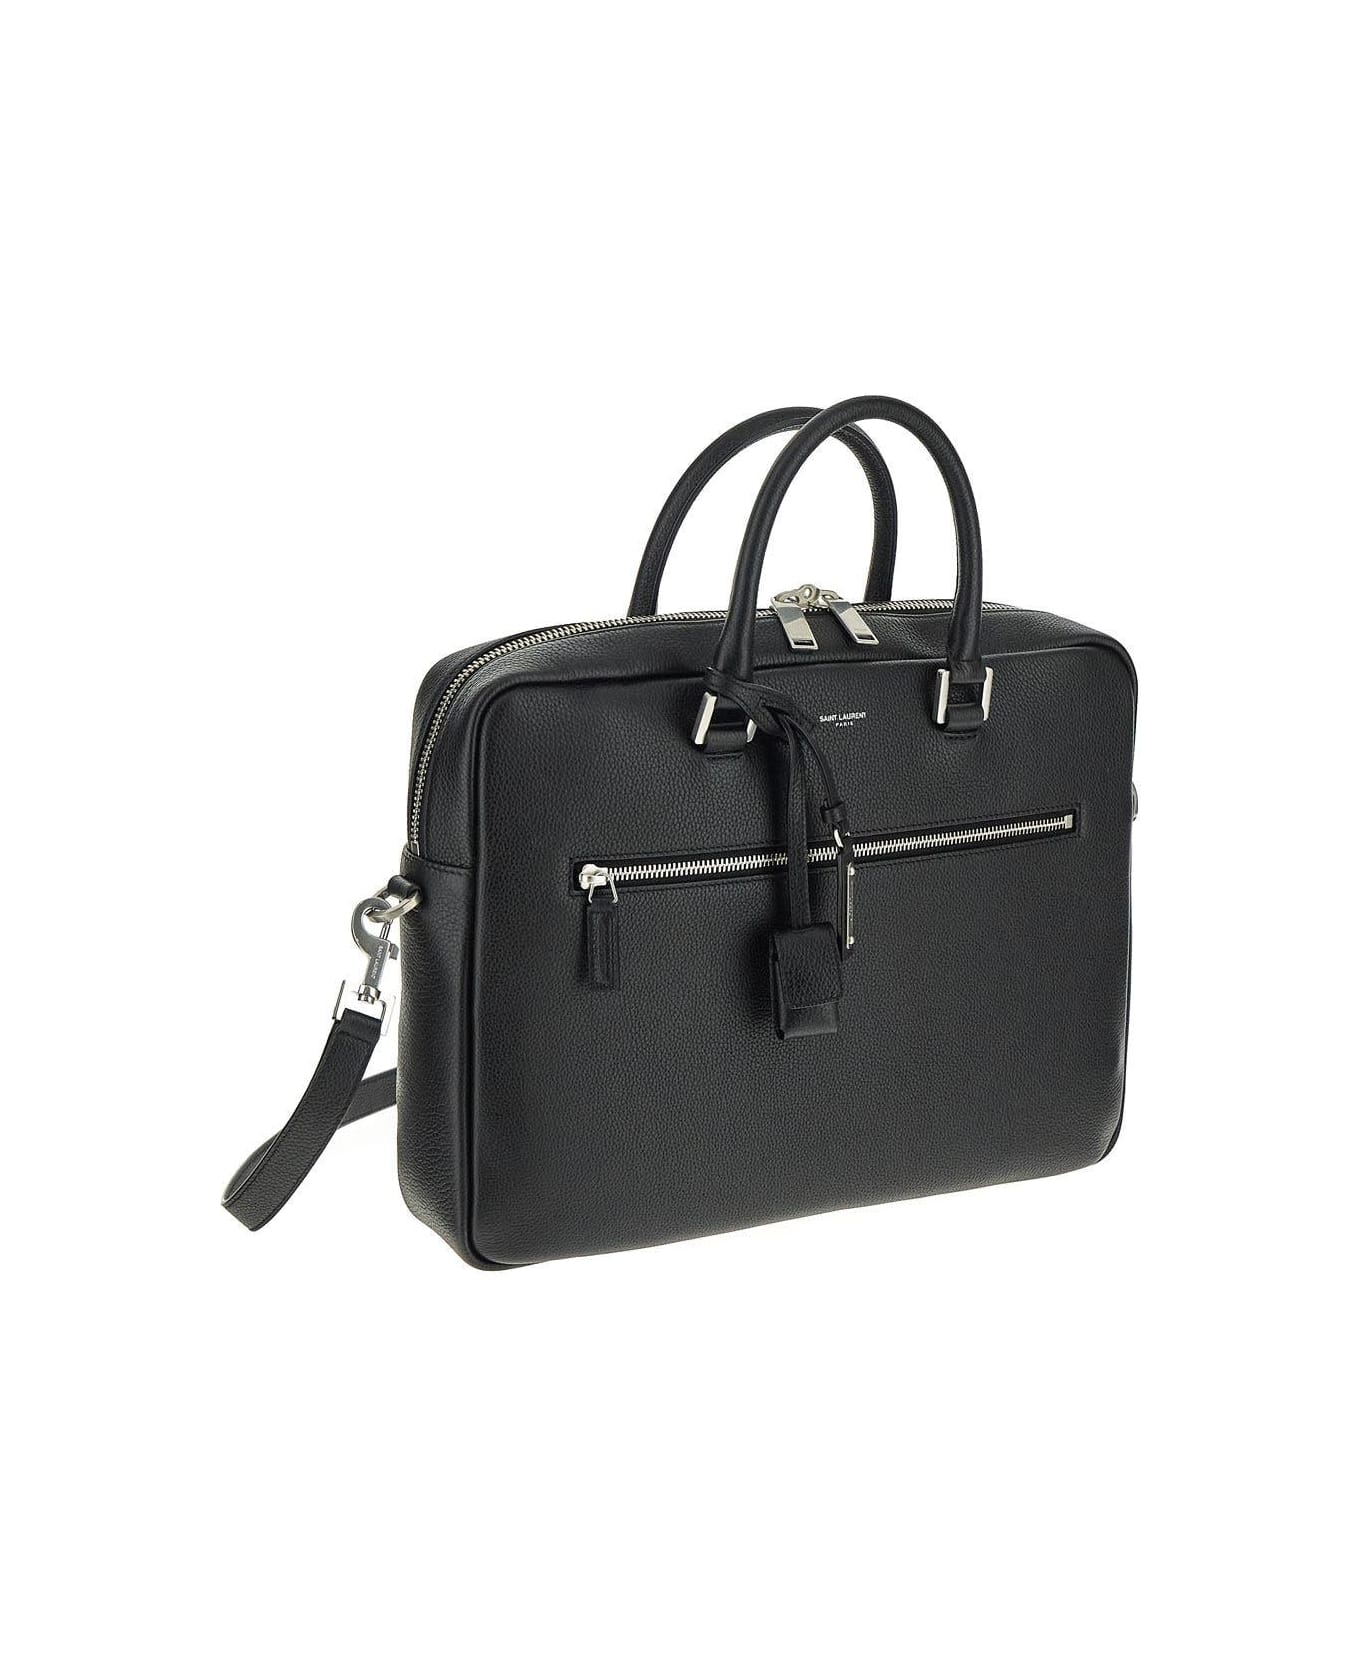 Saint Laurent Sac De Jour Briefcase In Grained Leather - Nero トラベルバッグ